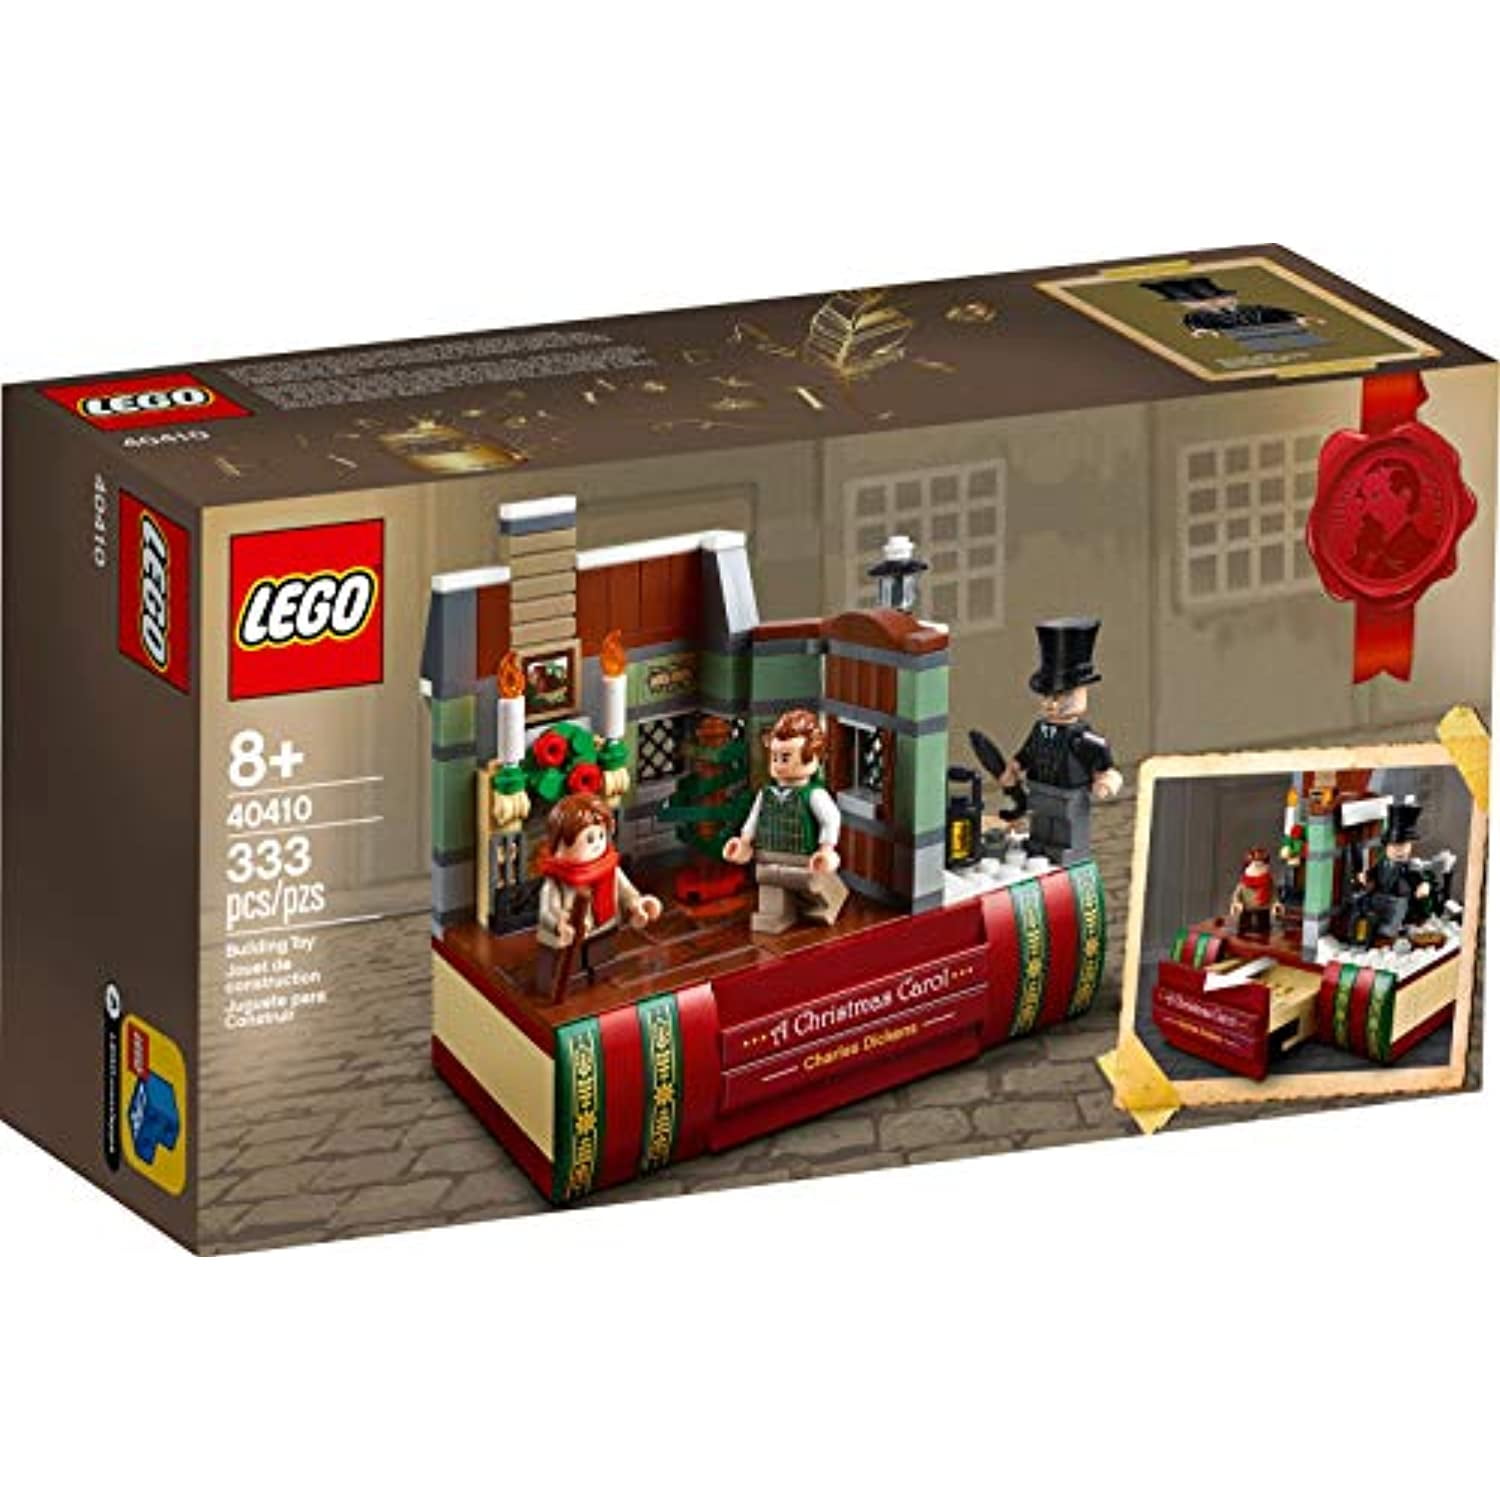 NEW LEGO 40410 A Christmas Carol Charles Dickens & 5006291 TEAL Brick 